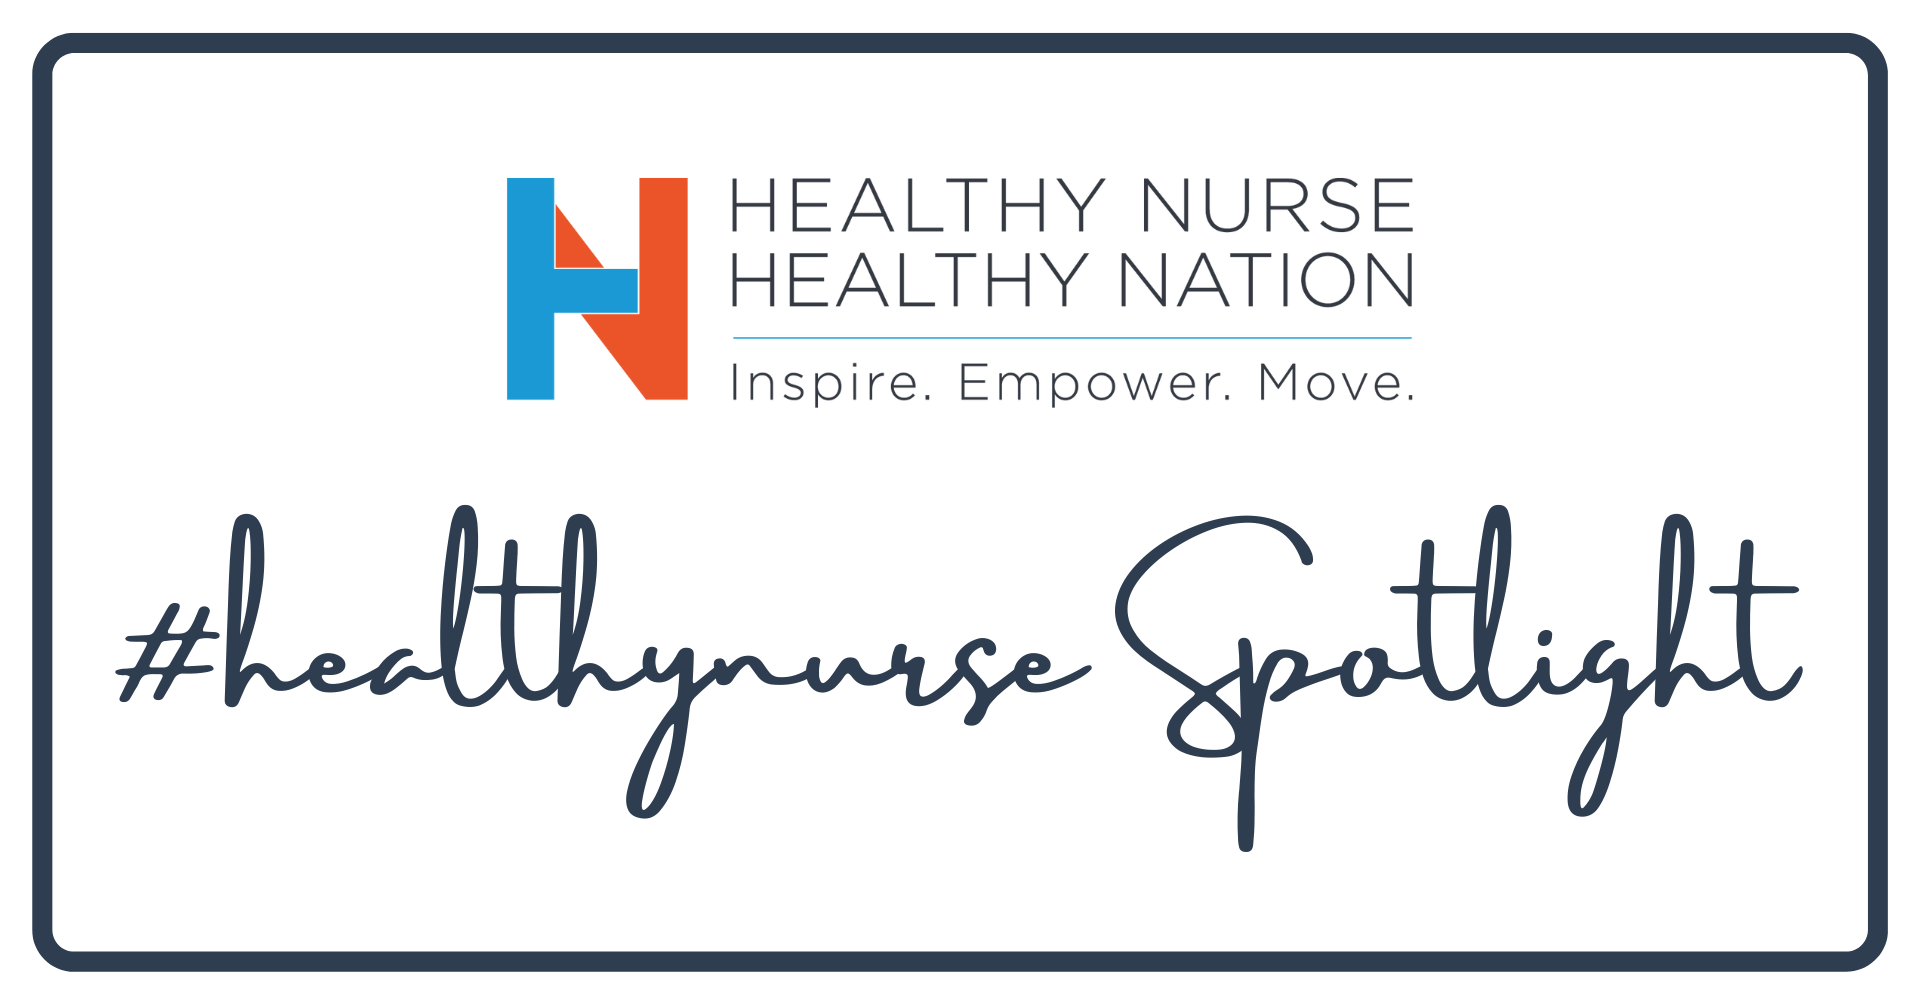 Healthy Nurse, Healthy Nation™ - #healthynurse Spotlight Series - Katie Carroll, BSN, RN, CHC, CPT 4232